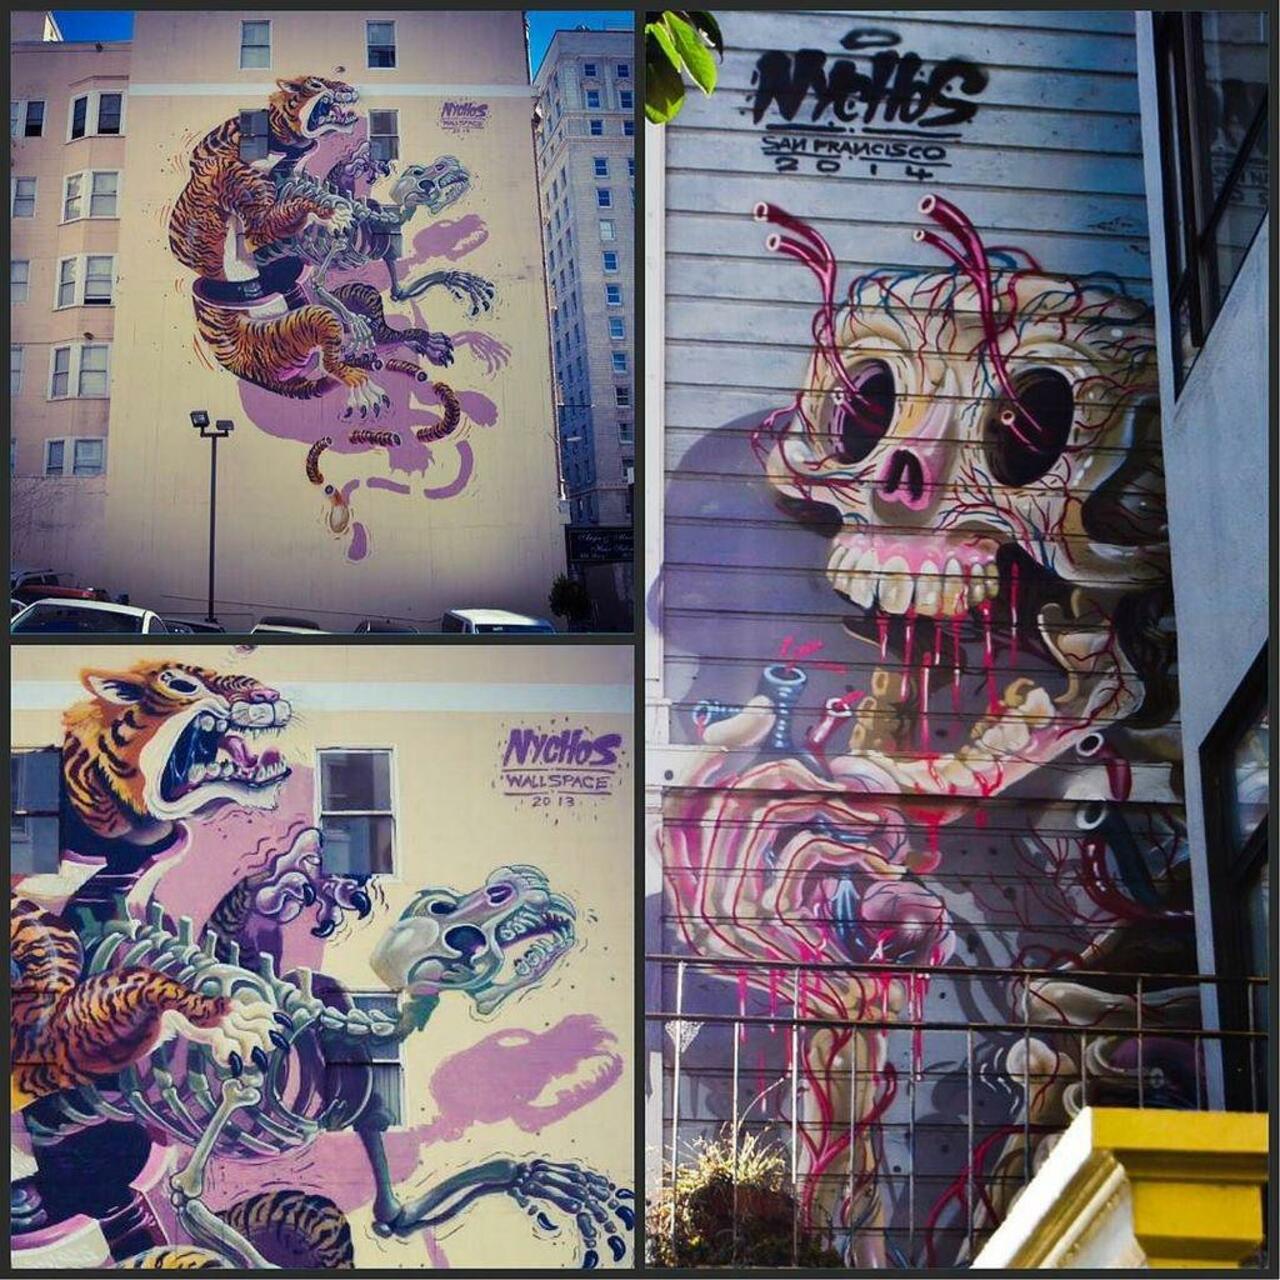 RT @artpushr: via #writeatroam "http://ift.tt/1MSqHkJ" #graffiti #streetart http://t.co/adWSCOjFmv